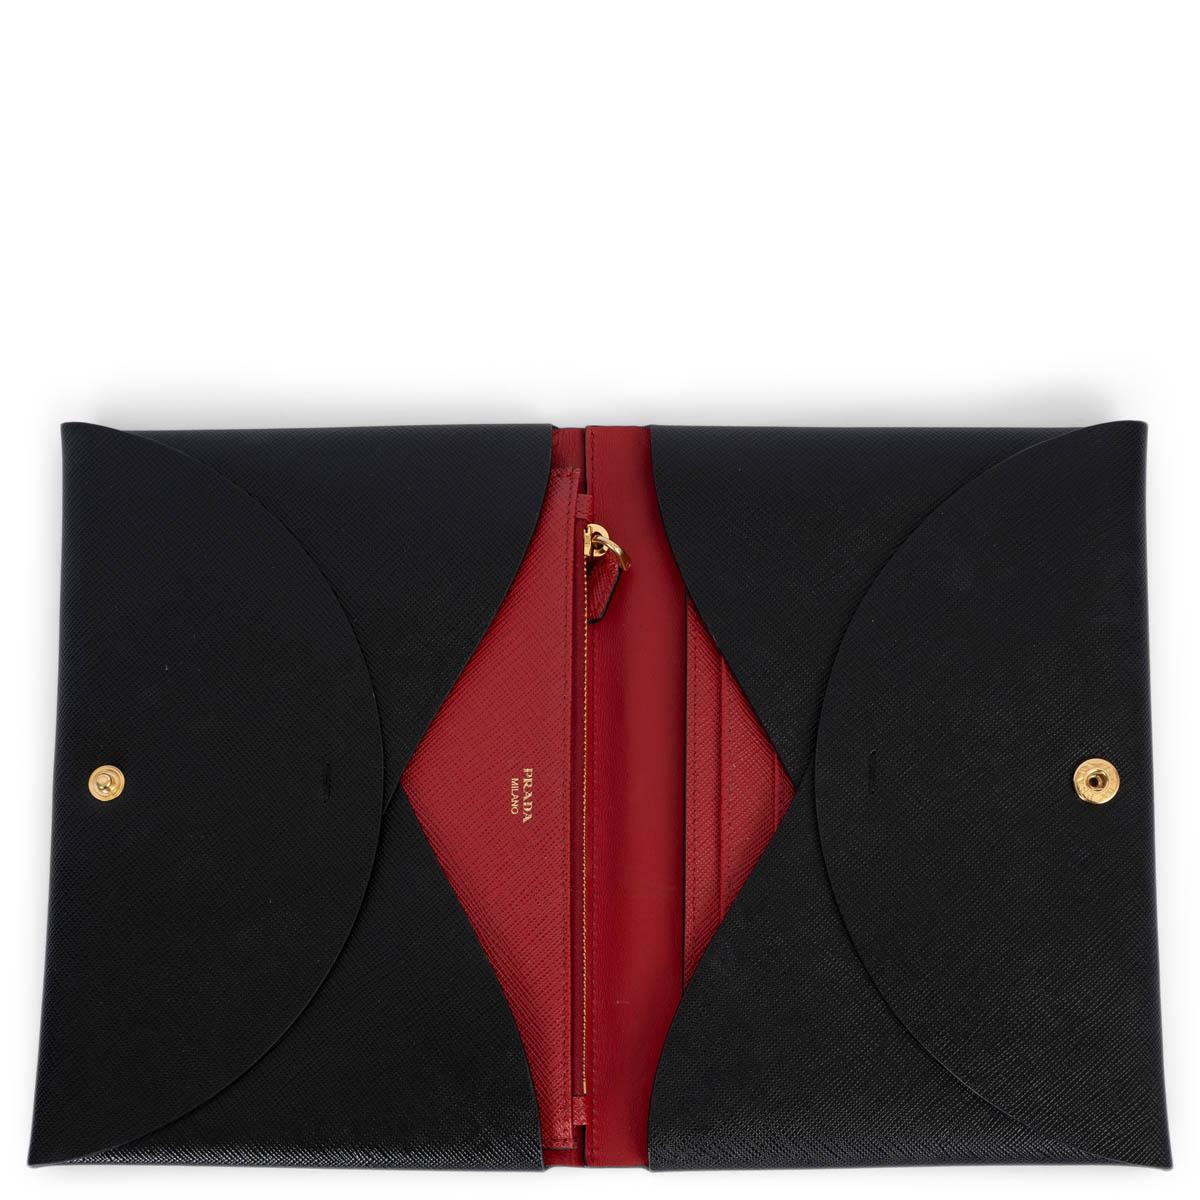 PRADA black / red Saffiano leather SMALL DOCUMENT PORTFOLIO Pouch Bag For Sale 1